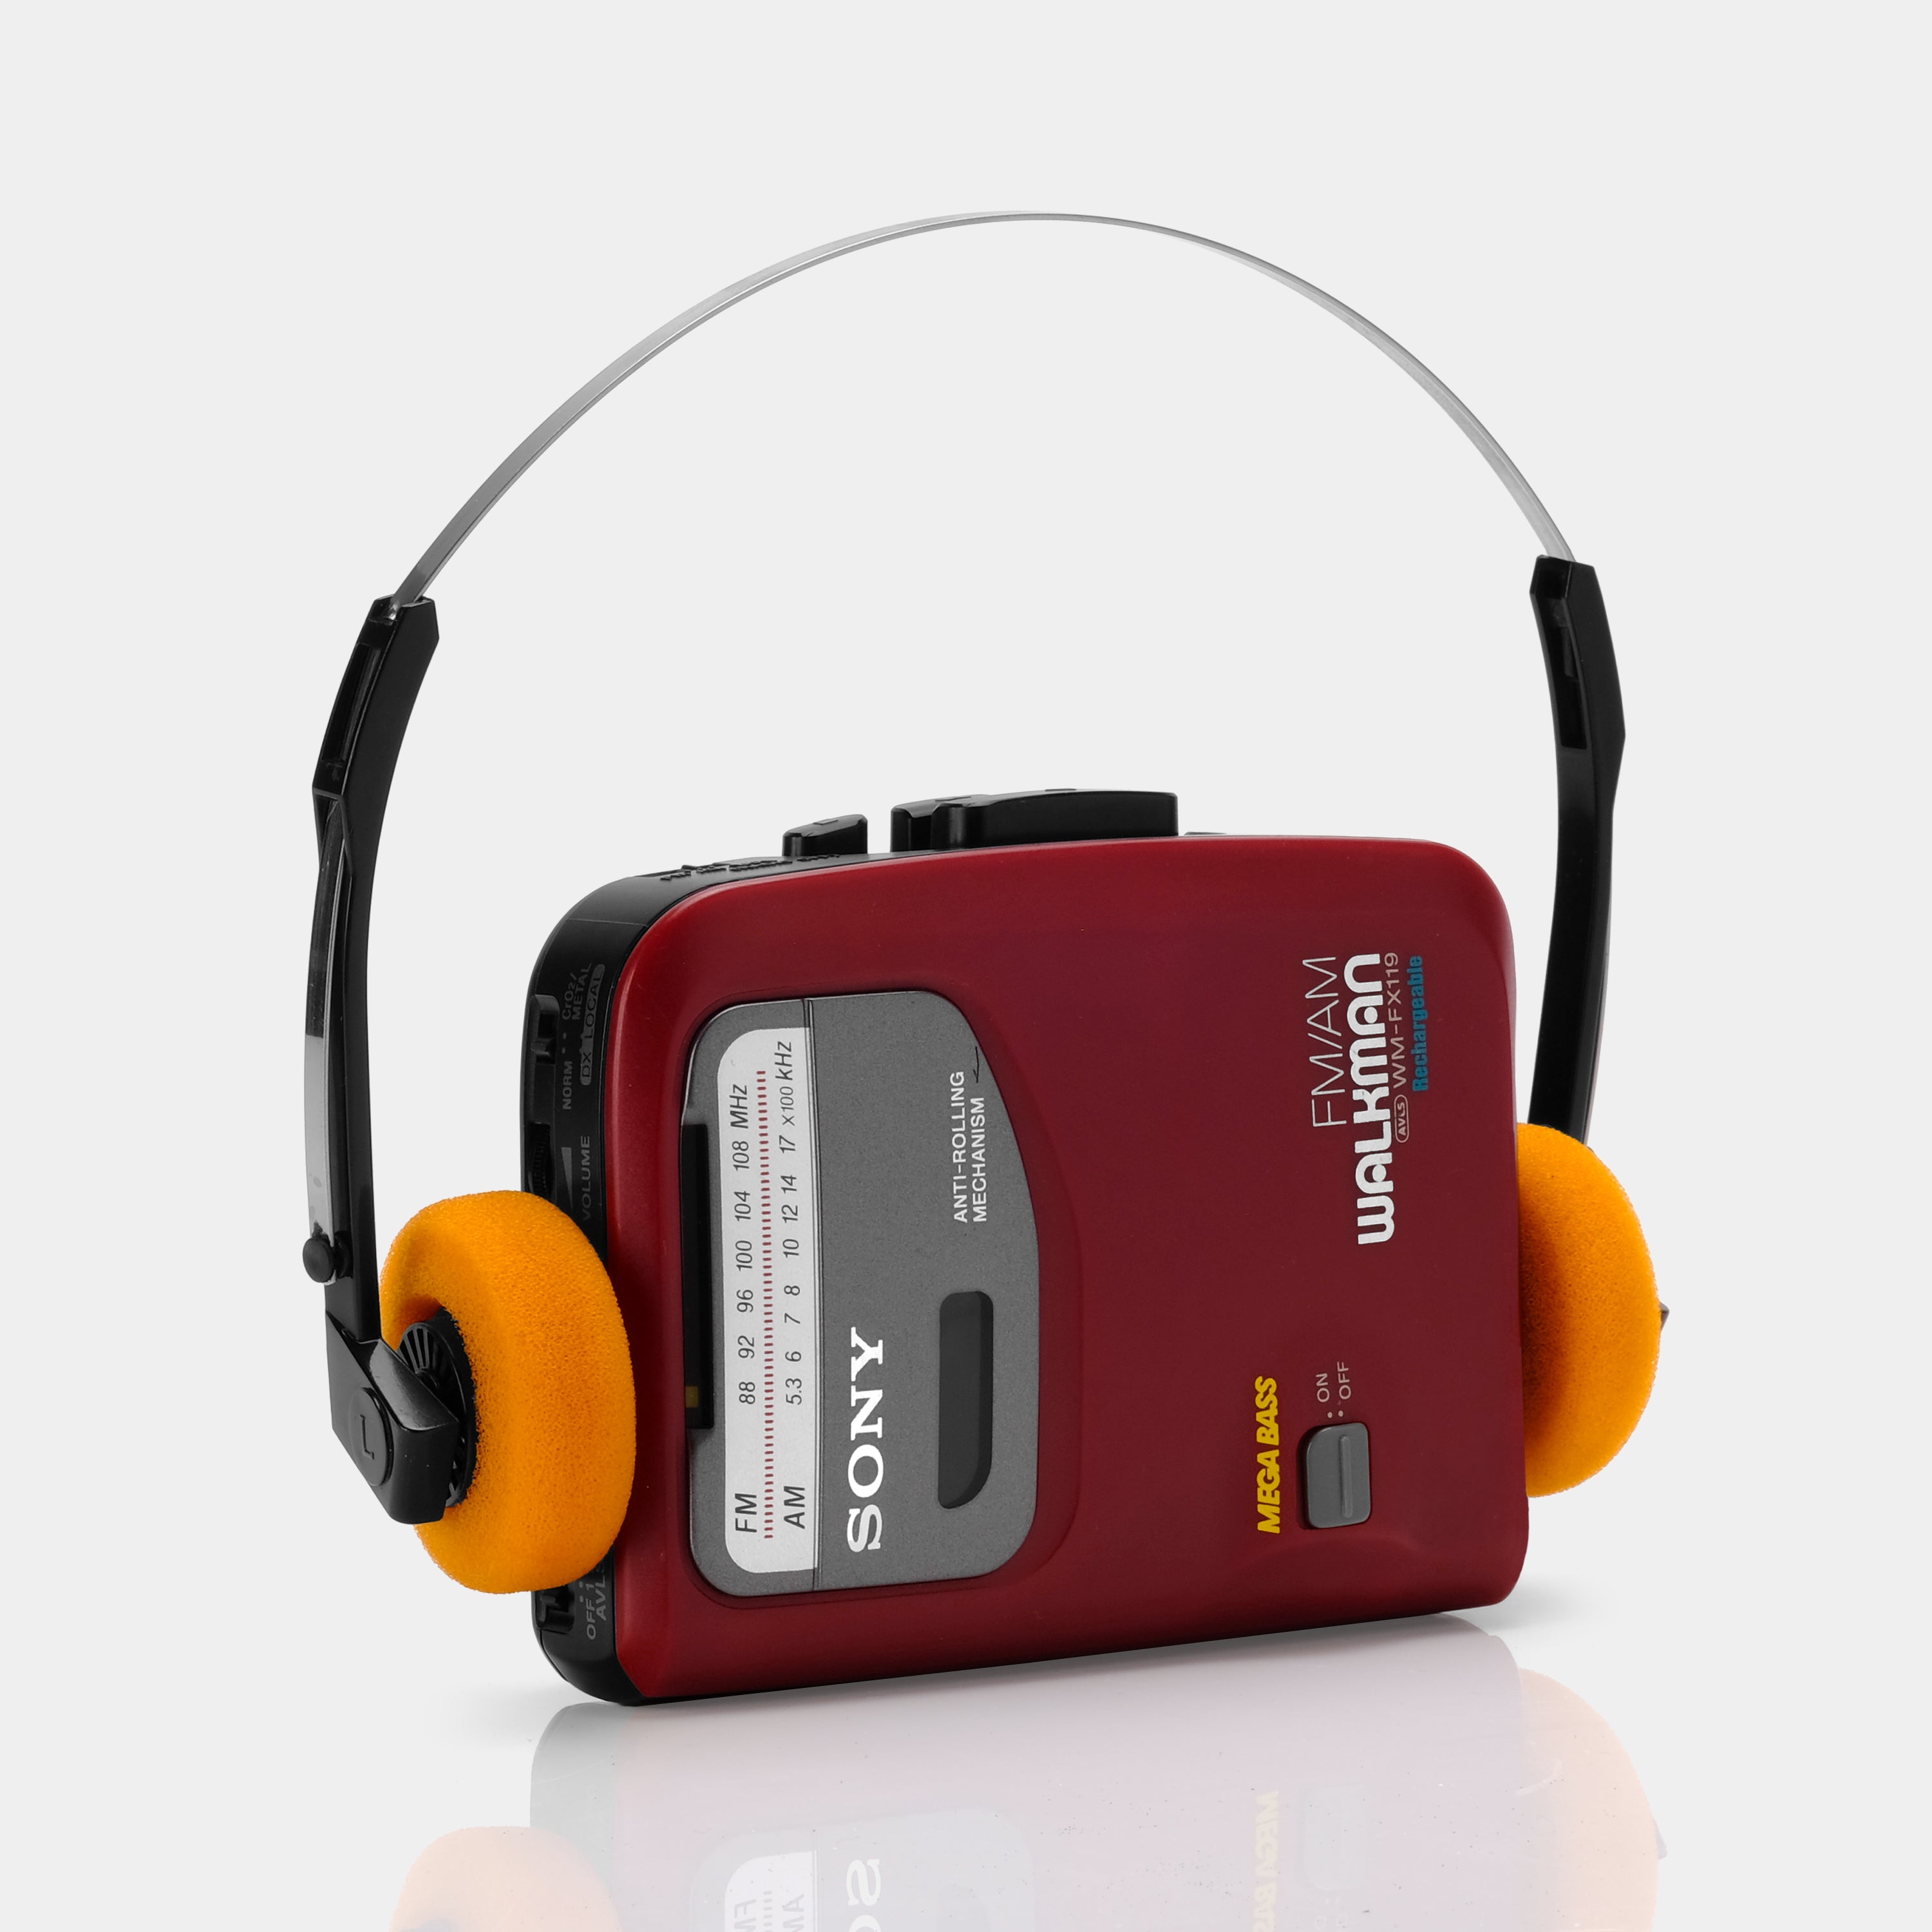 Sony Walkman WM-FX119 Red Portable Cassette Player